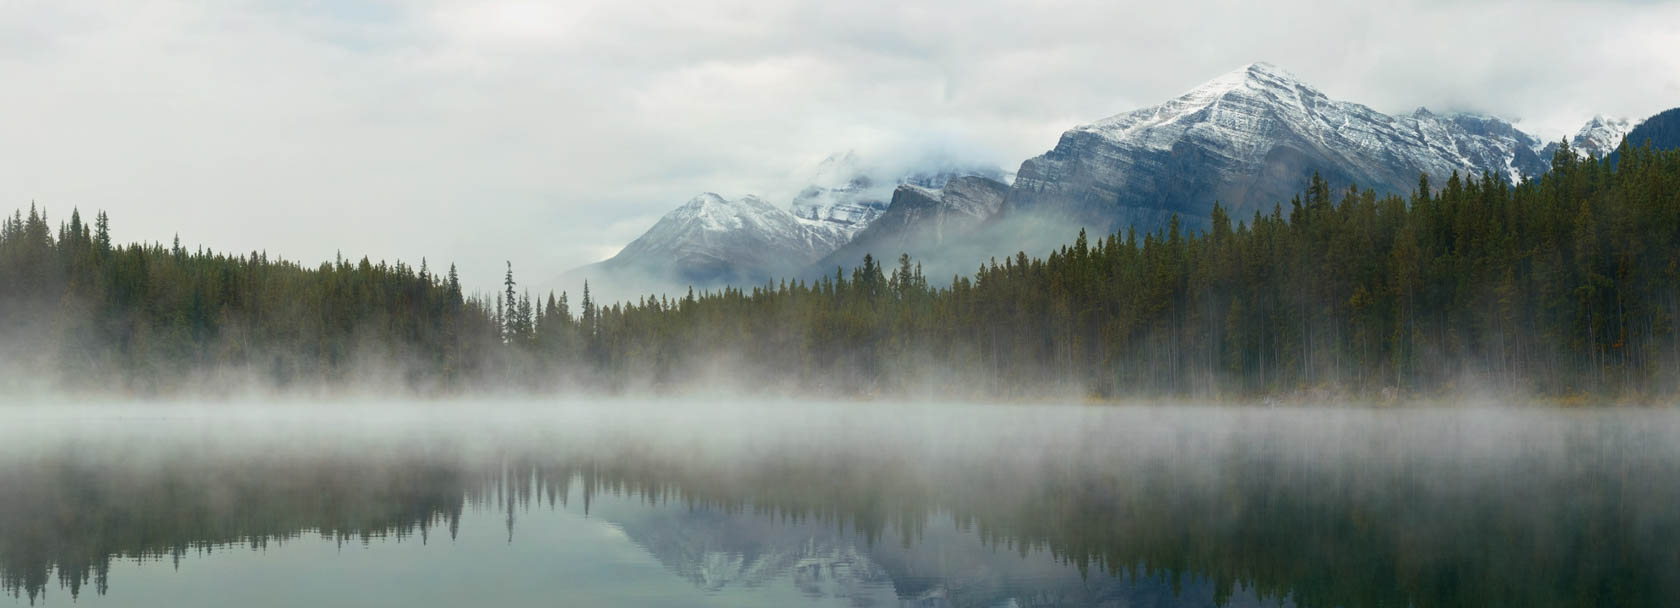 Misty mountain lake.